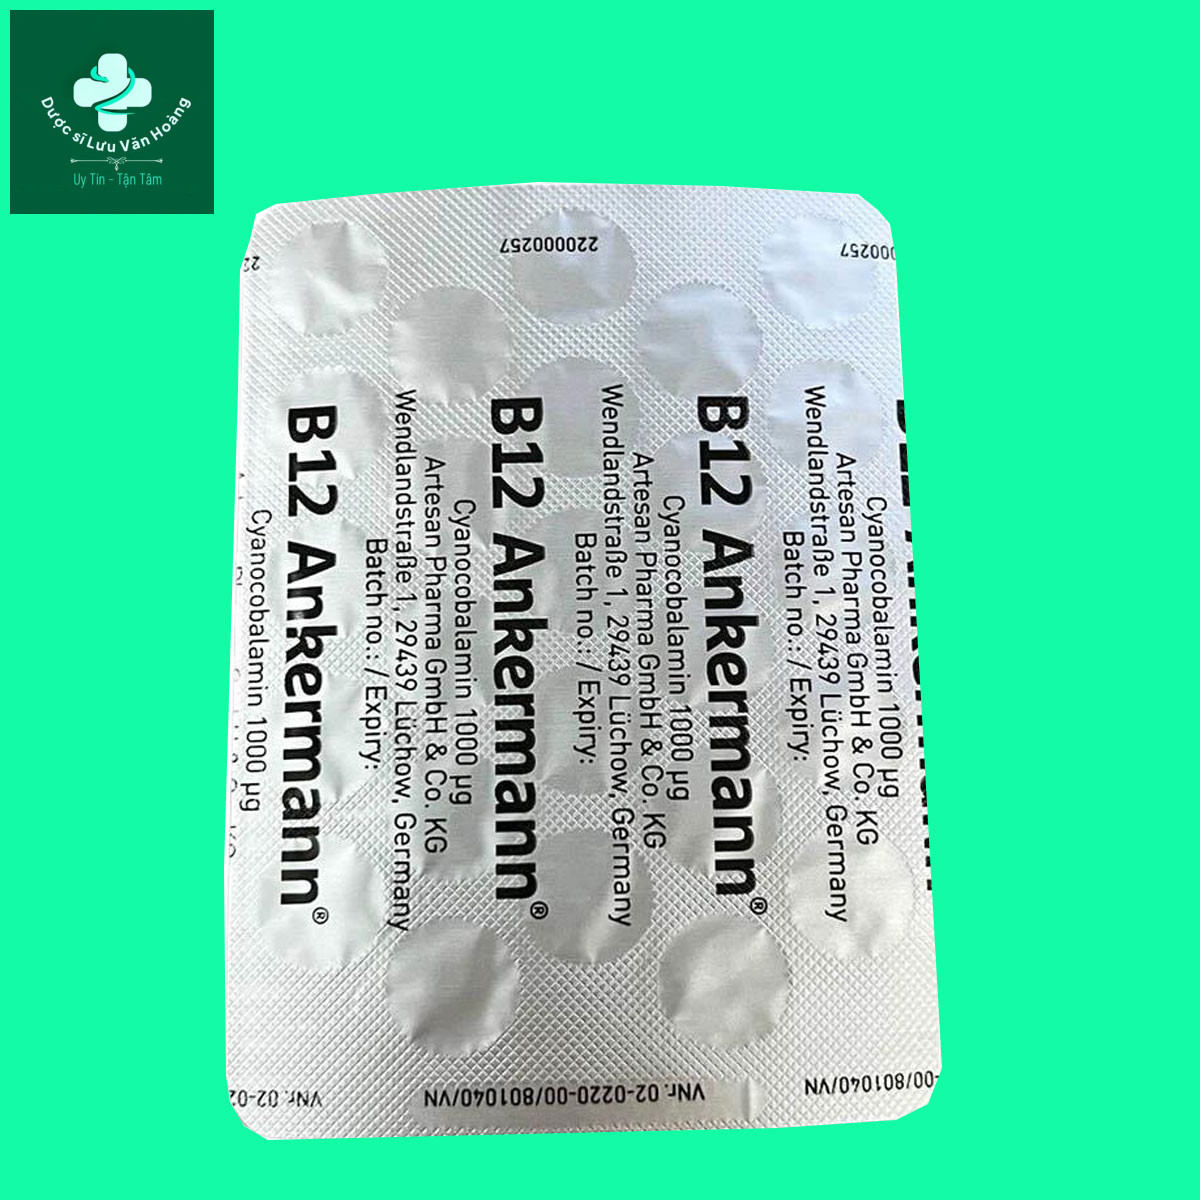 B12-vitamin Ankermann